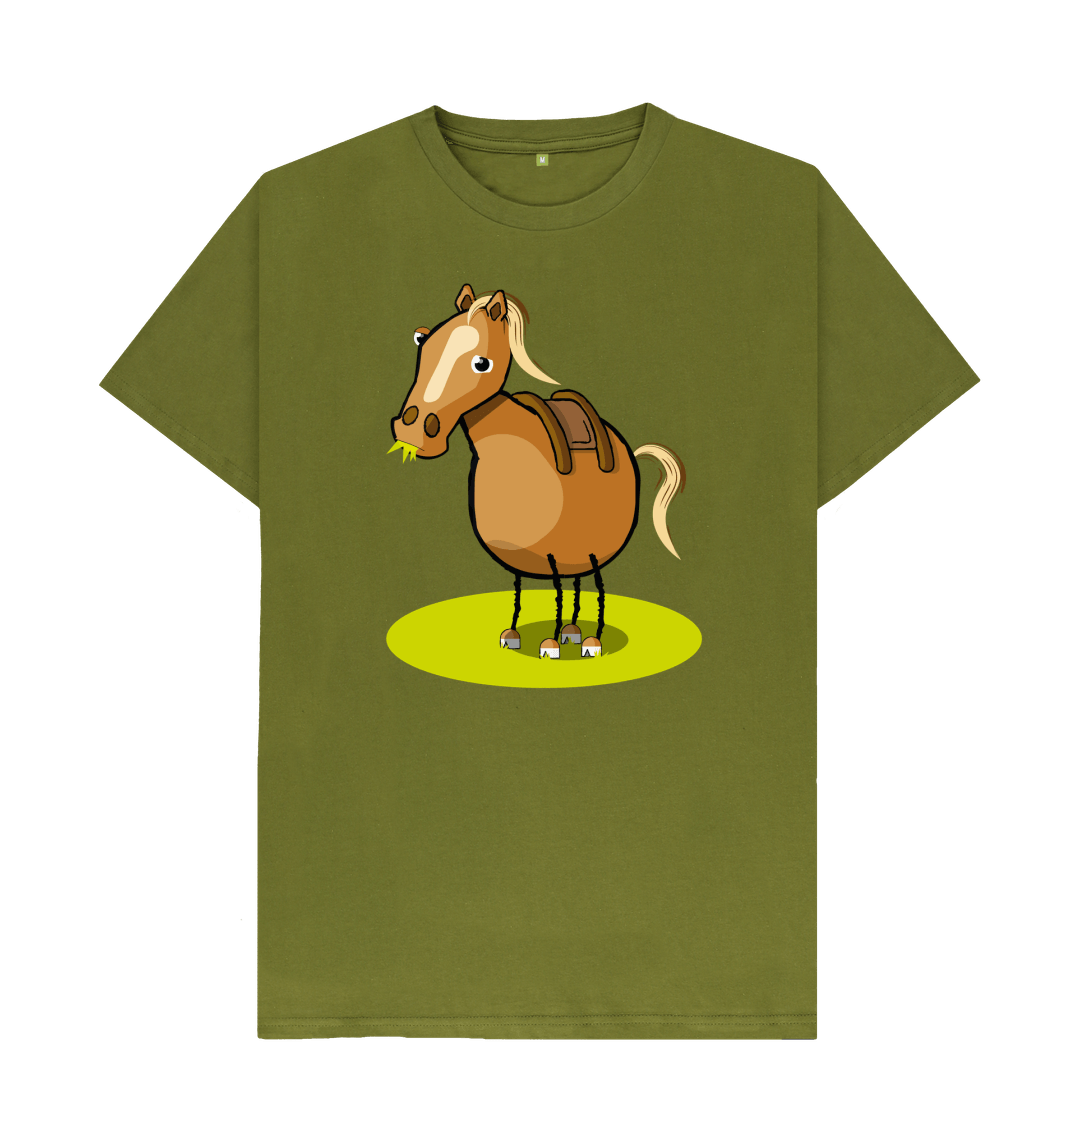 Moss Green Organic Cotton Men's Mental Health T-Shirt Funny Grumpy Horse